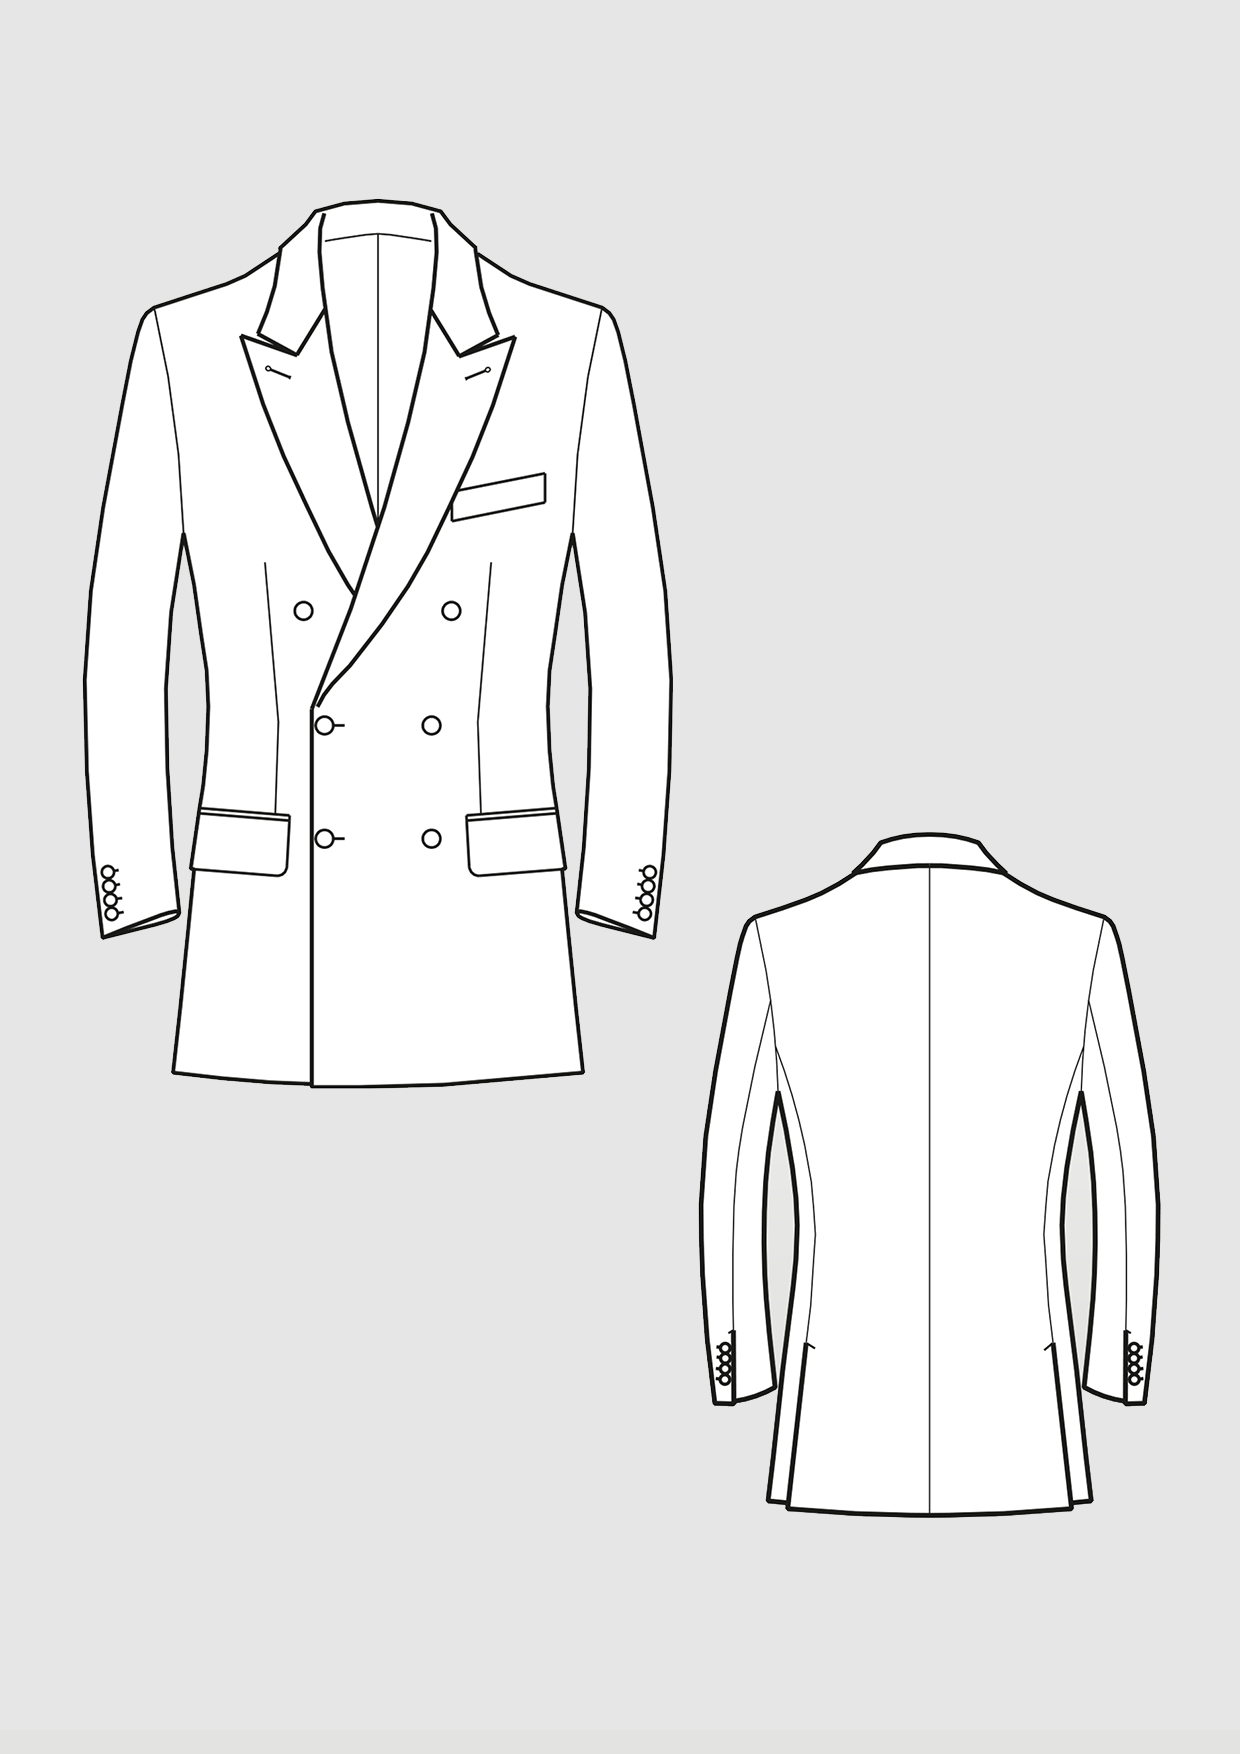 Product: Pattern Double-Breasted Jacket Basic Block